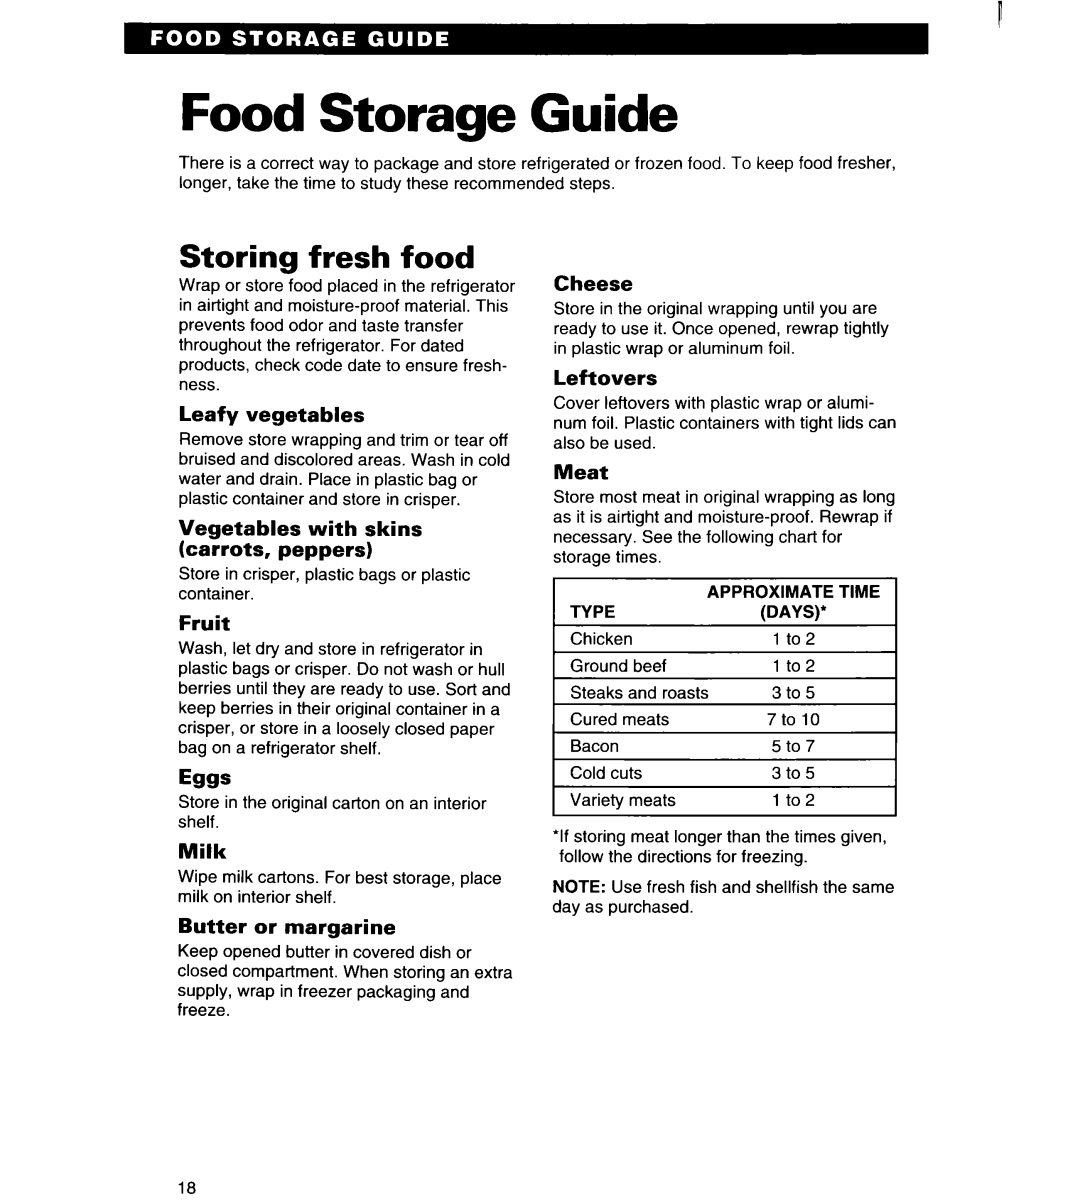 Estate IT18HD Food Storage Guide, Storing fresh food, Leafy vegetables, Vegetables with skins carrots, peppers, Fruit 